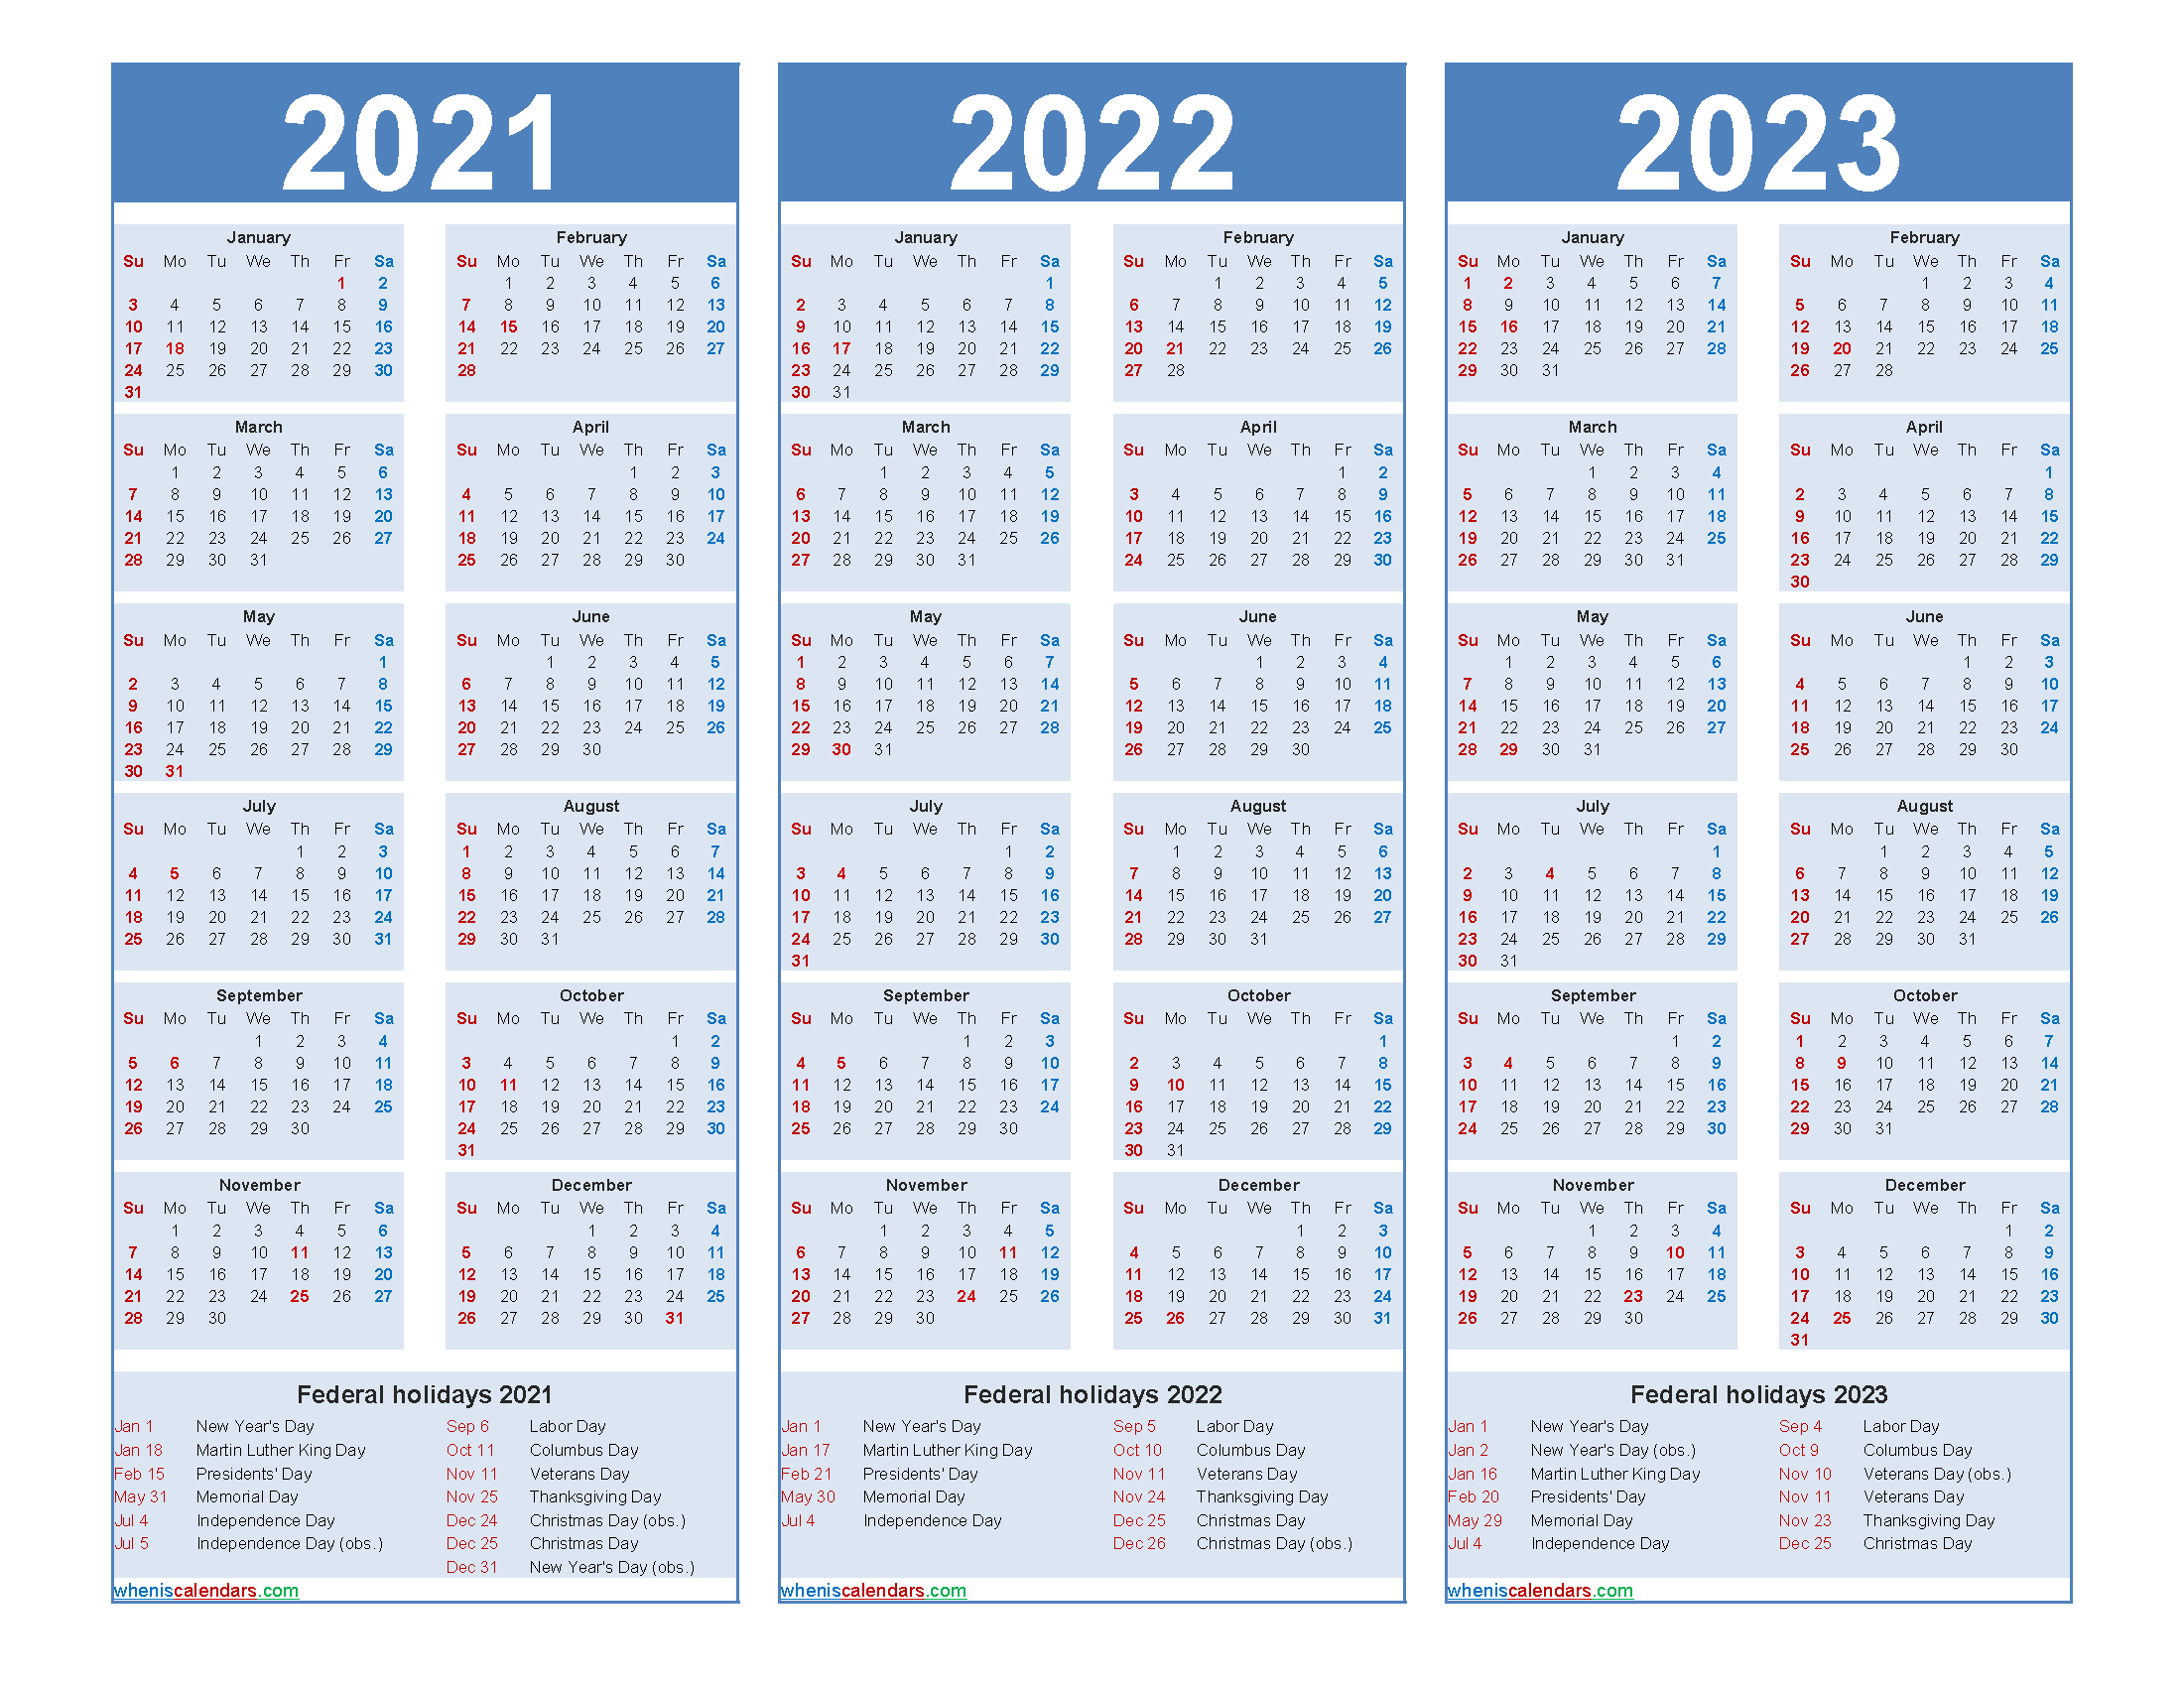 central-dauphin-2022-2023-calendar-may-calendar-2022